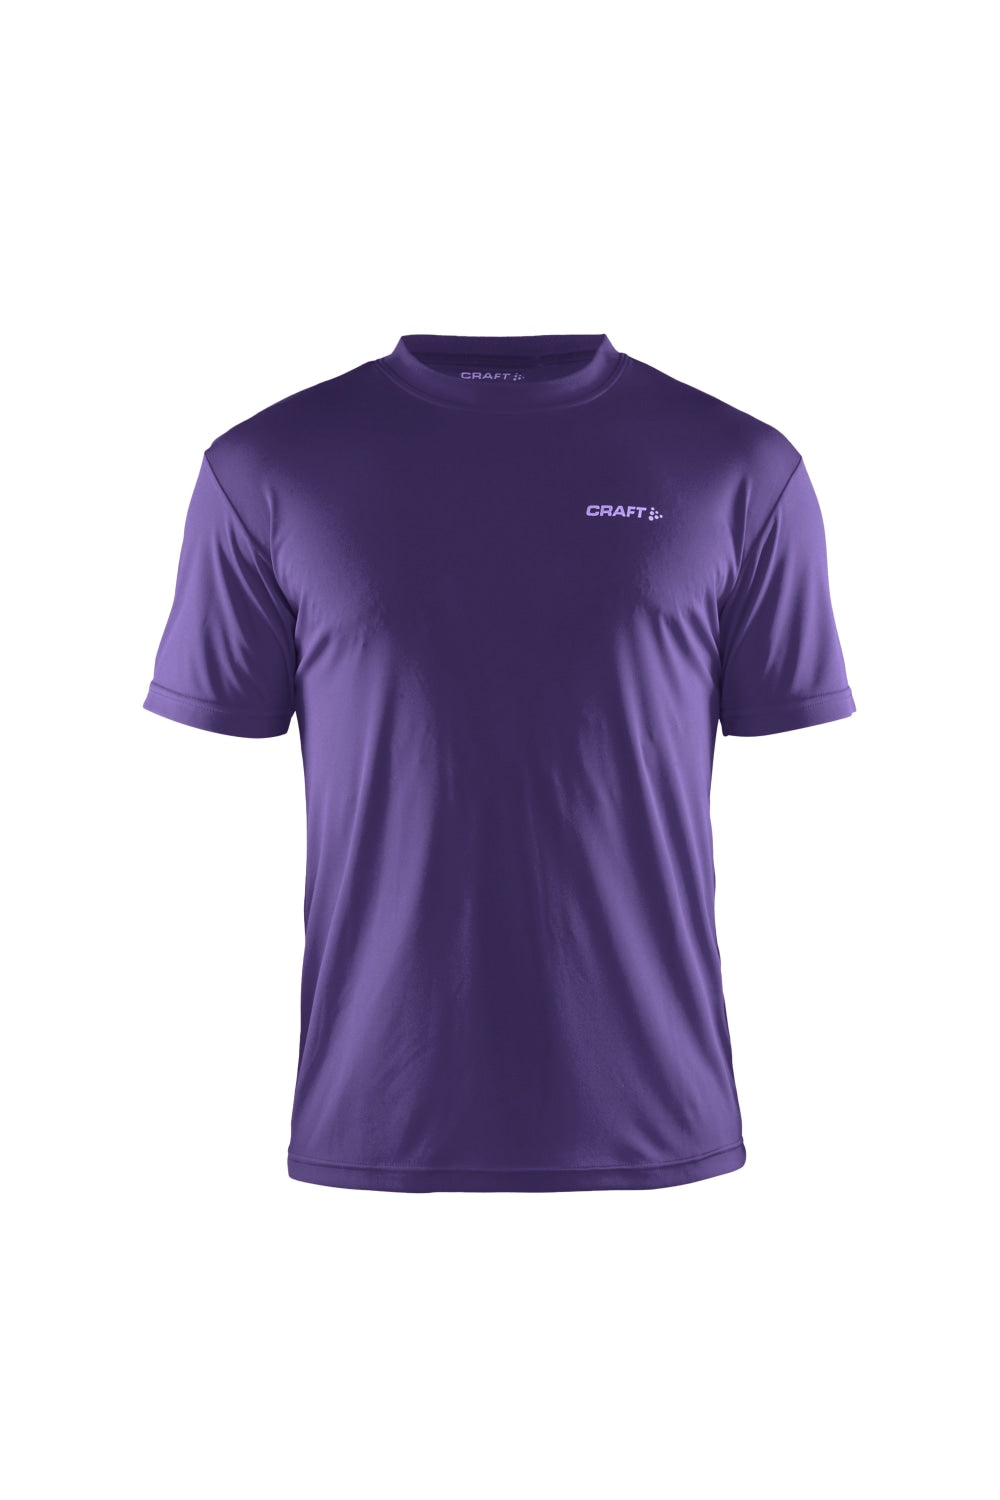 Craft Mens Prime Lightweight Moisture Wicking Sports T-Shirt (Purple)